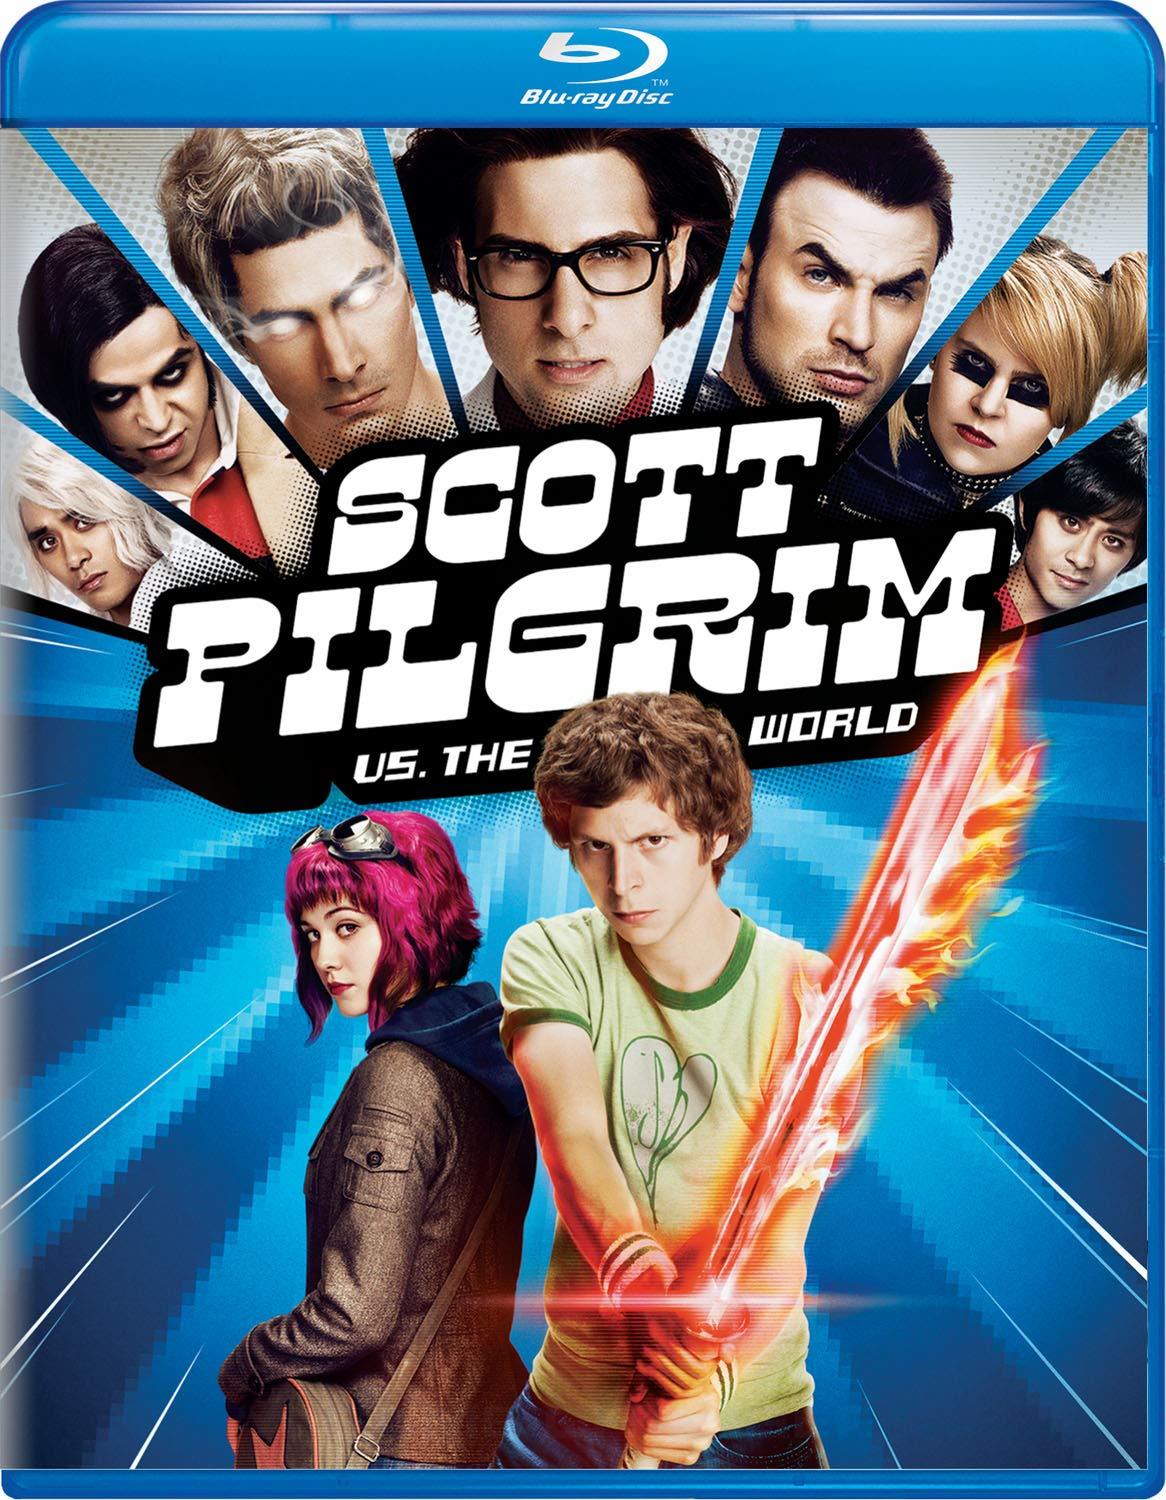 world - Scott Pilgrim vs. the World (2010) Scott Pilgrim vs. Los Ex de la Chica de Sus Sueños (2010) [DTS 5.1 + SUP] [Blu Ray-Rip]  224412_front